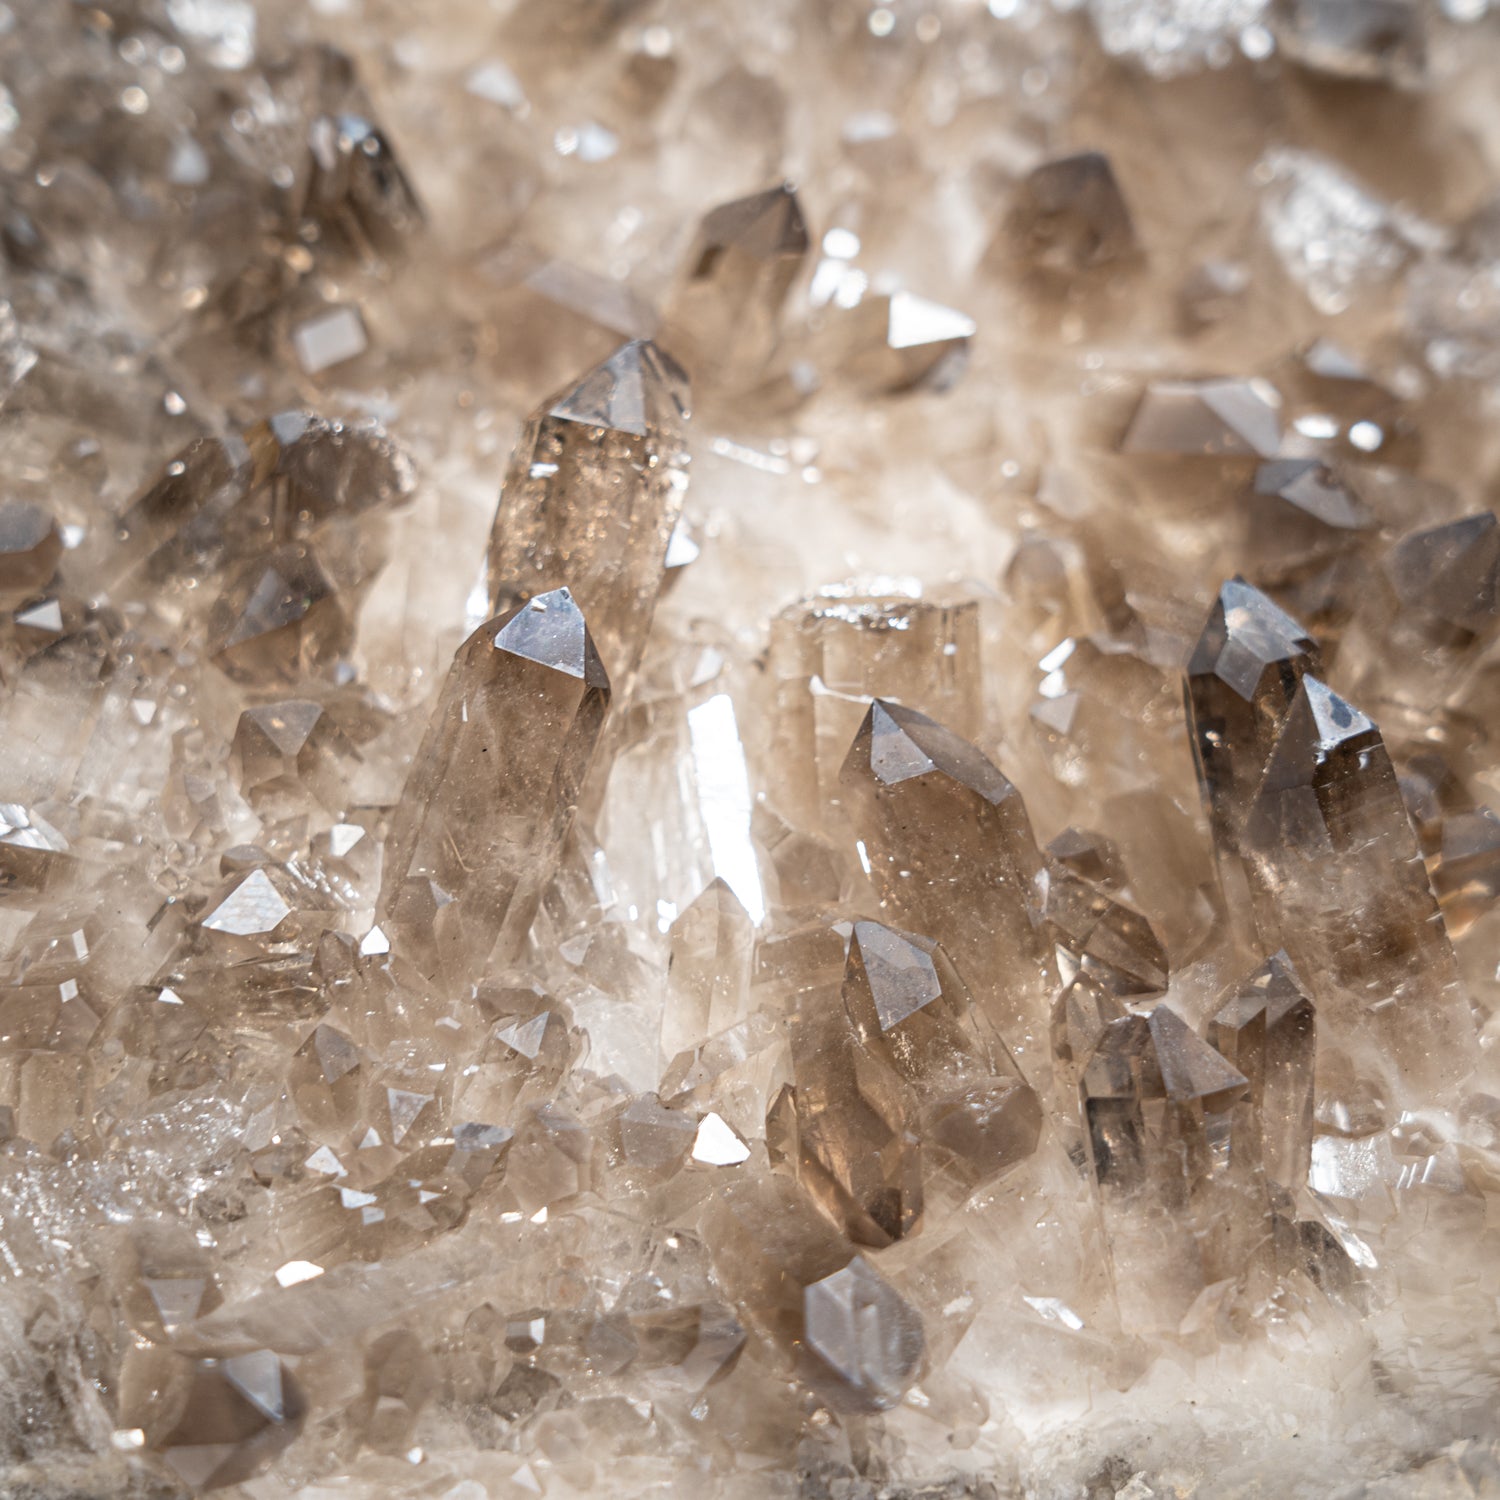 Genuine Smoky Quartz Crystal Cluster from Mina Gerais, Brazil (3.3 lbs)